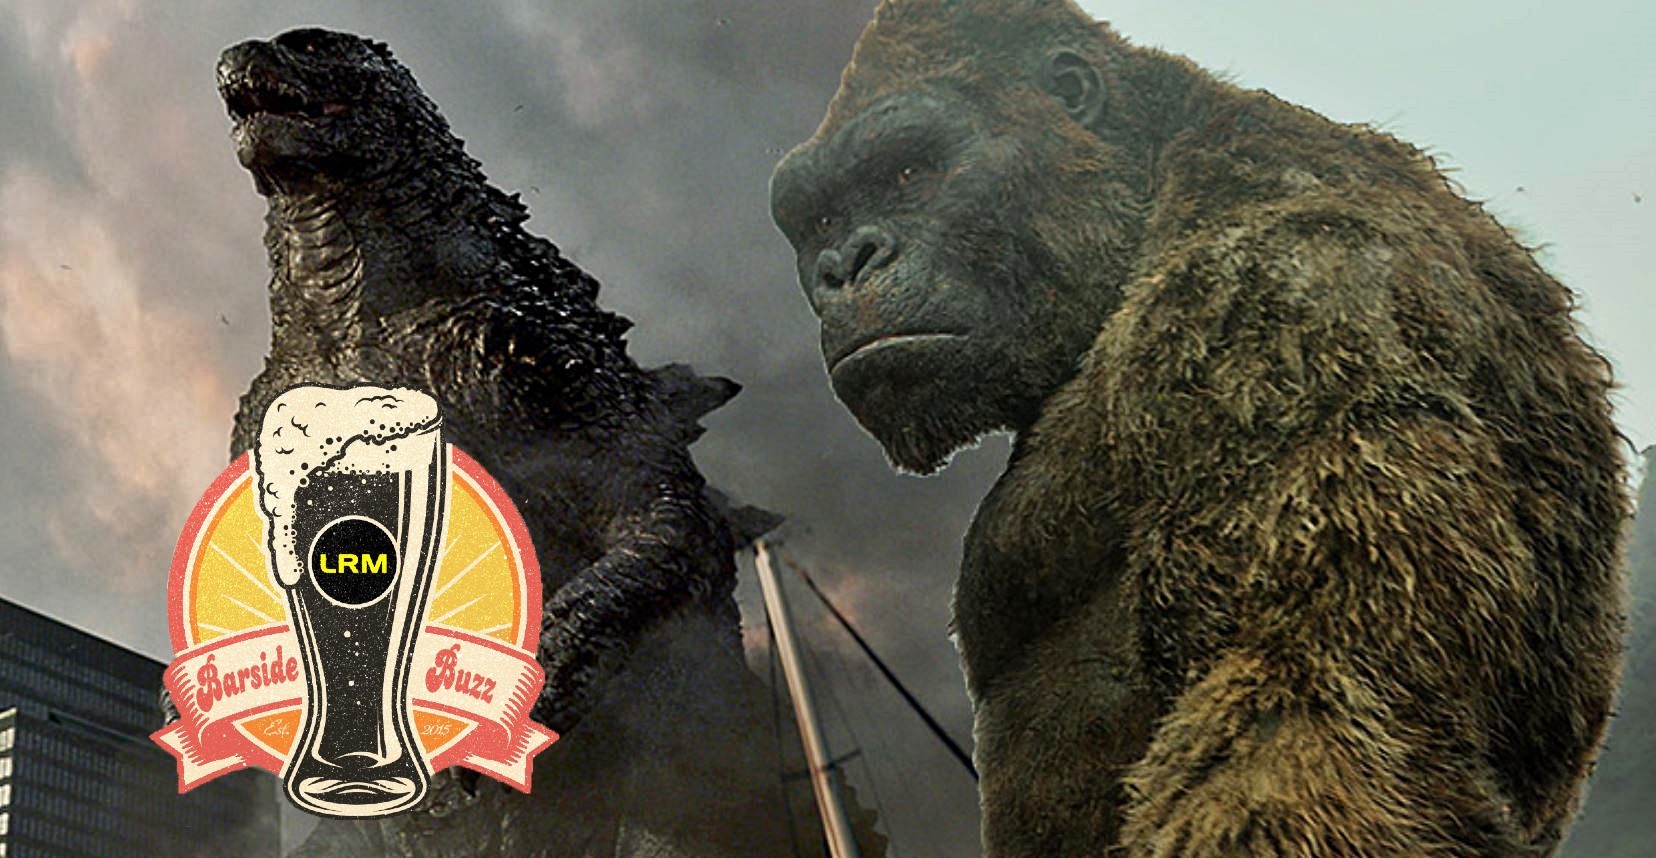 Evidence That Godzilla Vs Kong Is Delayed Till May 2021? |LRM’s Barside Buzz